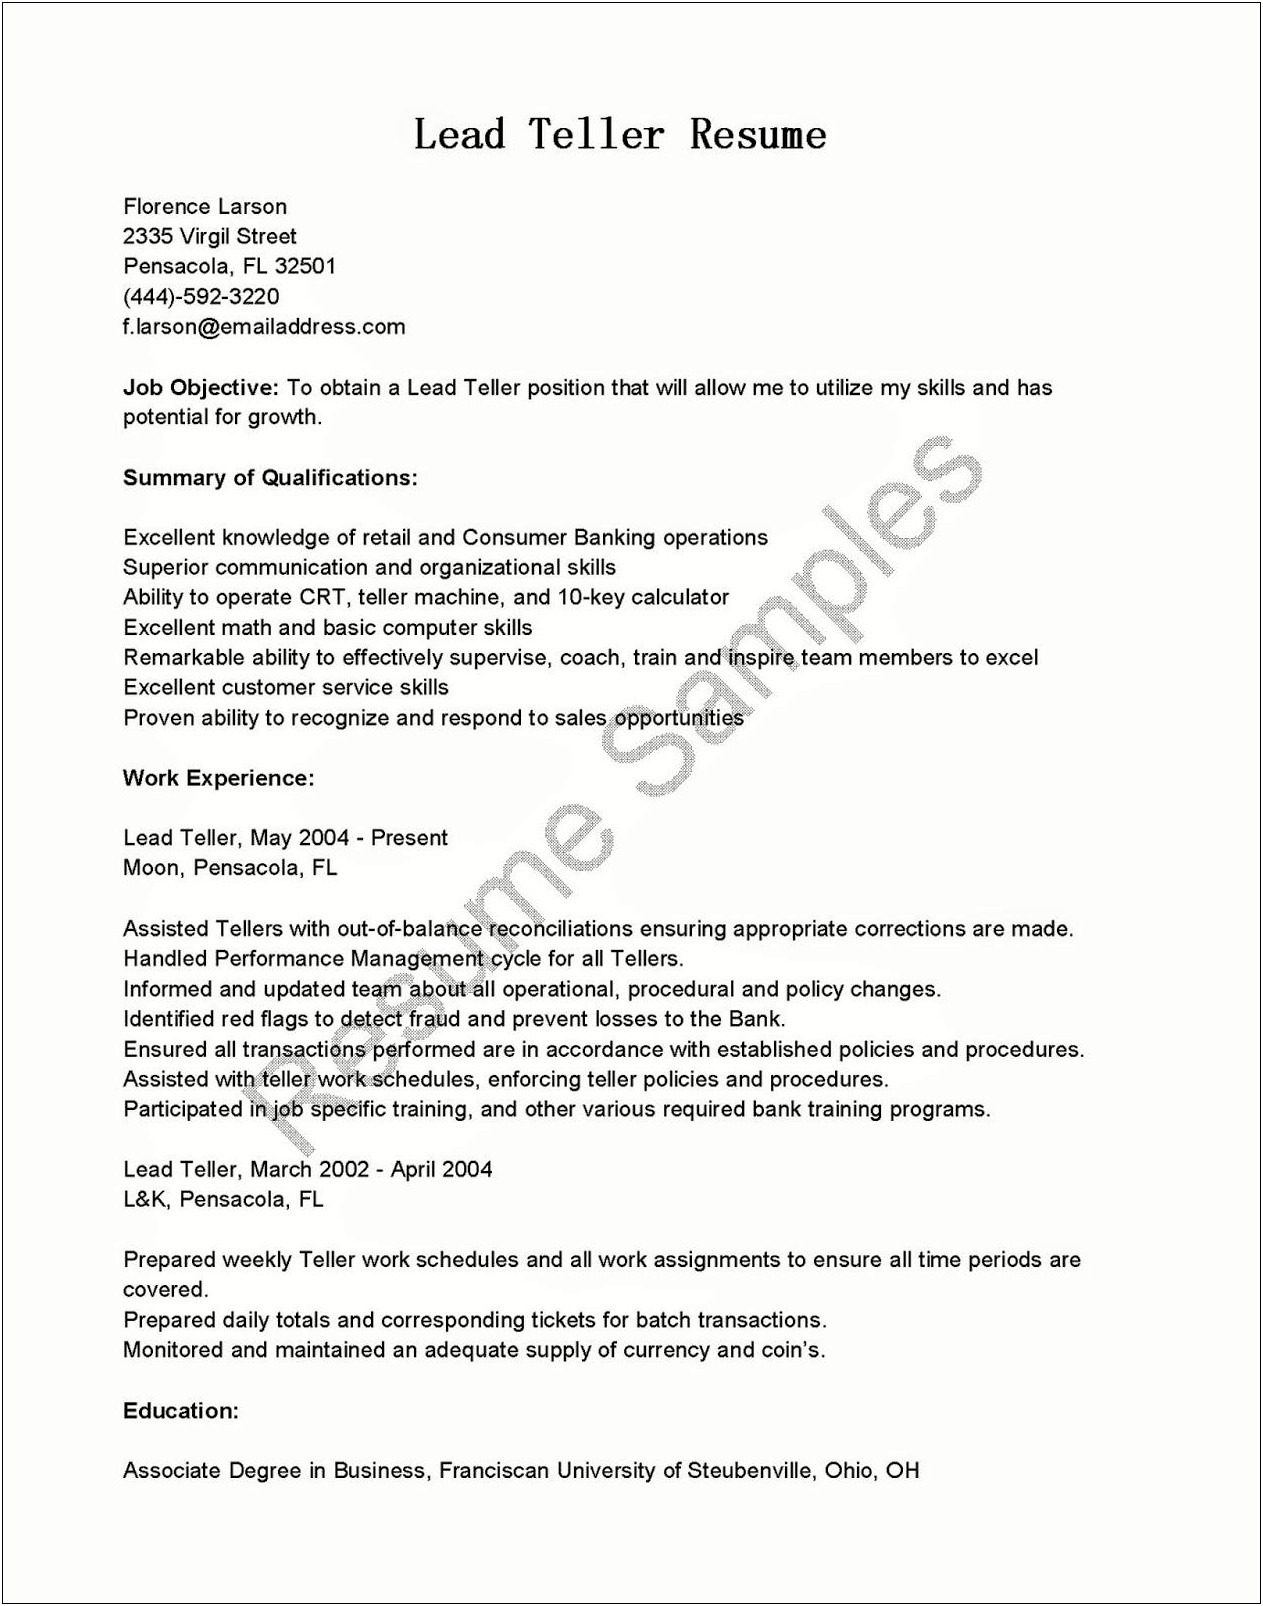 Lead Teller Job Description Resume